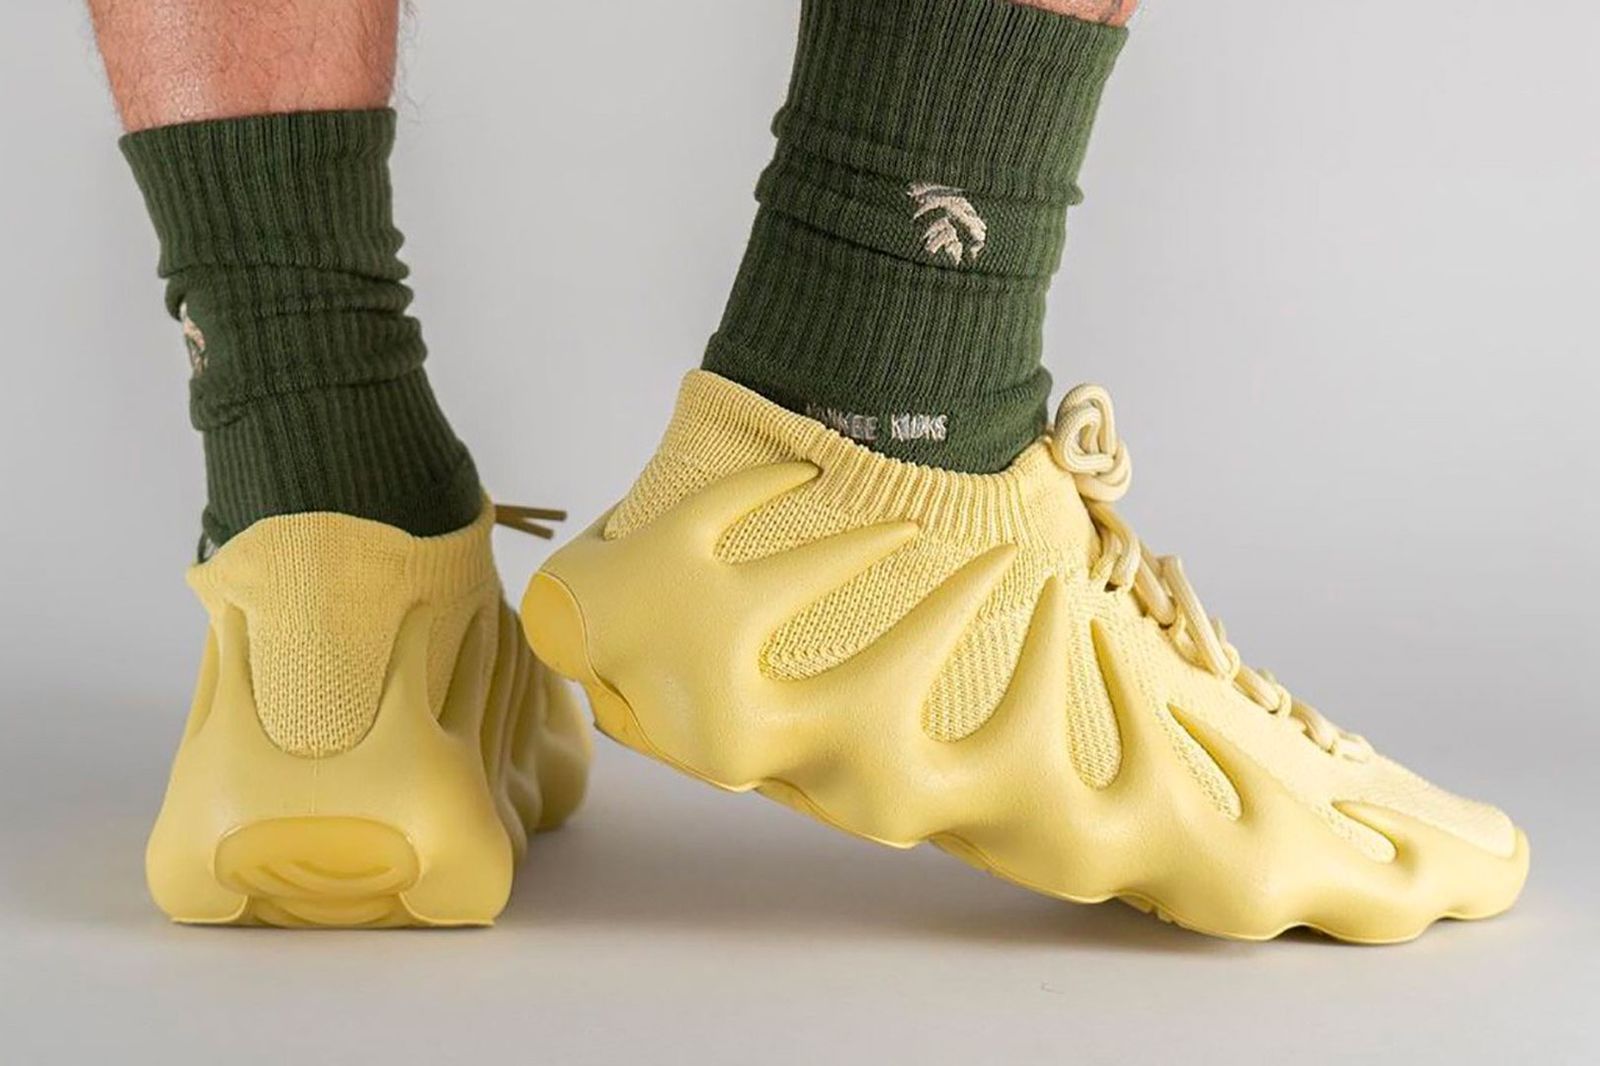 adidas Yeezy 450 "Sulfur" on-foot image of yellow PrimeKnit sneakers.